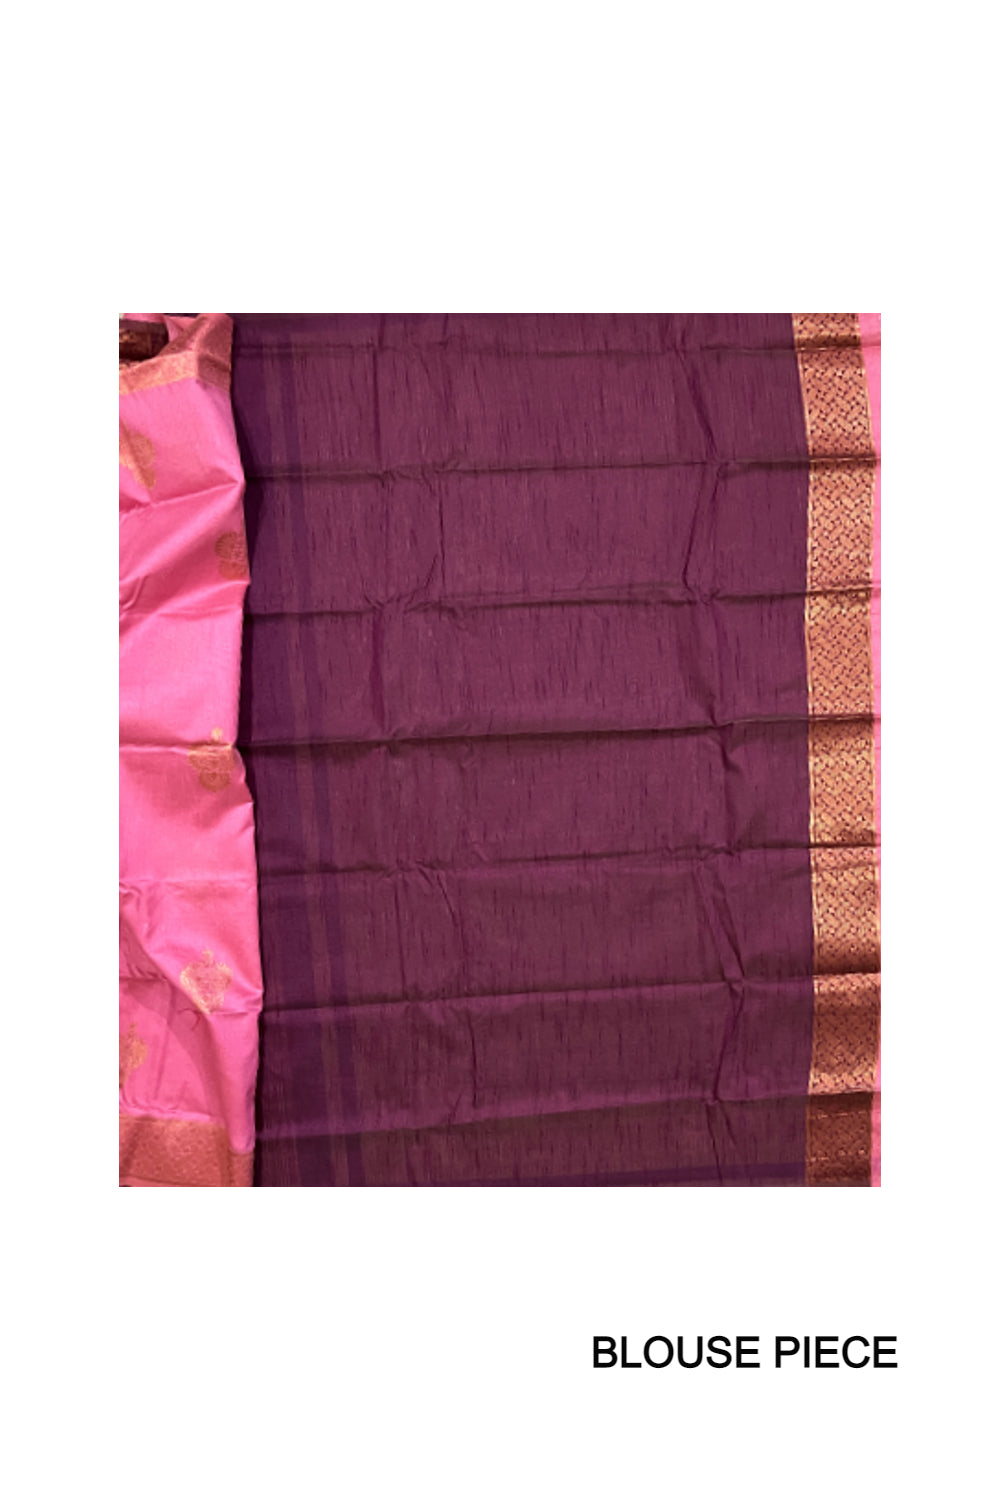 Southloom Cotton Silk Pink Designer Saree with Kasavu Woven Works on Pallu